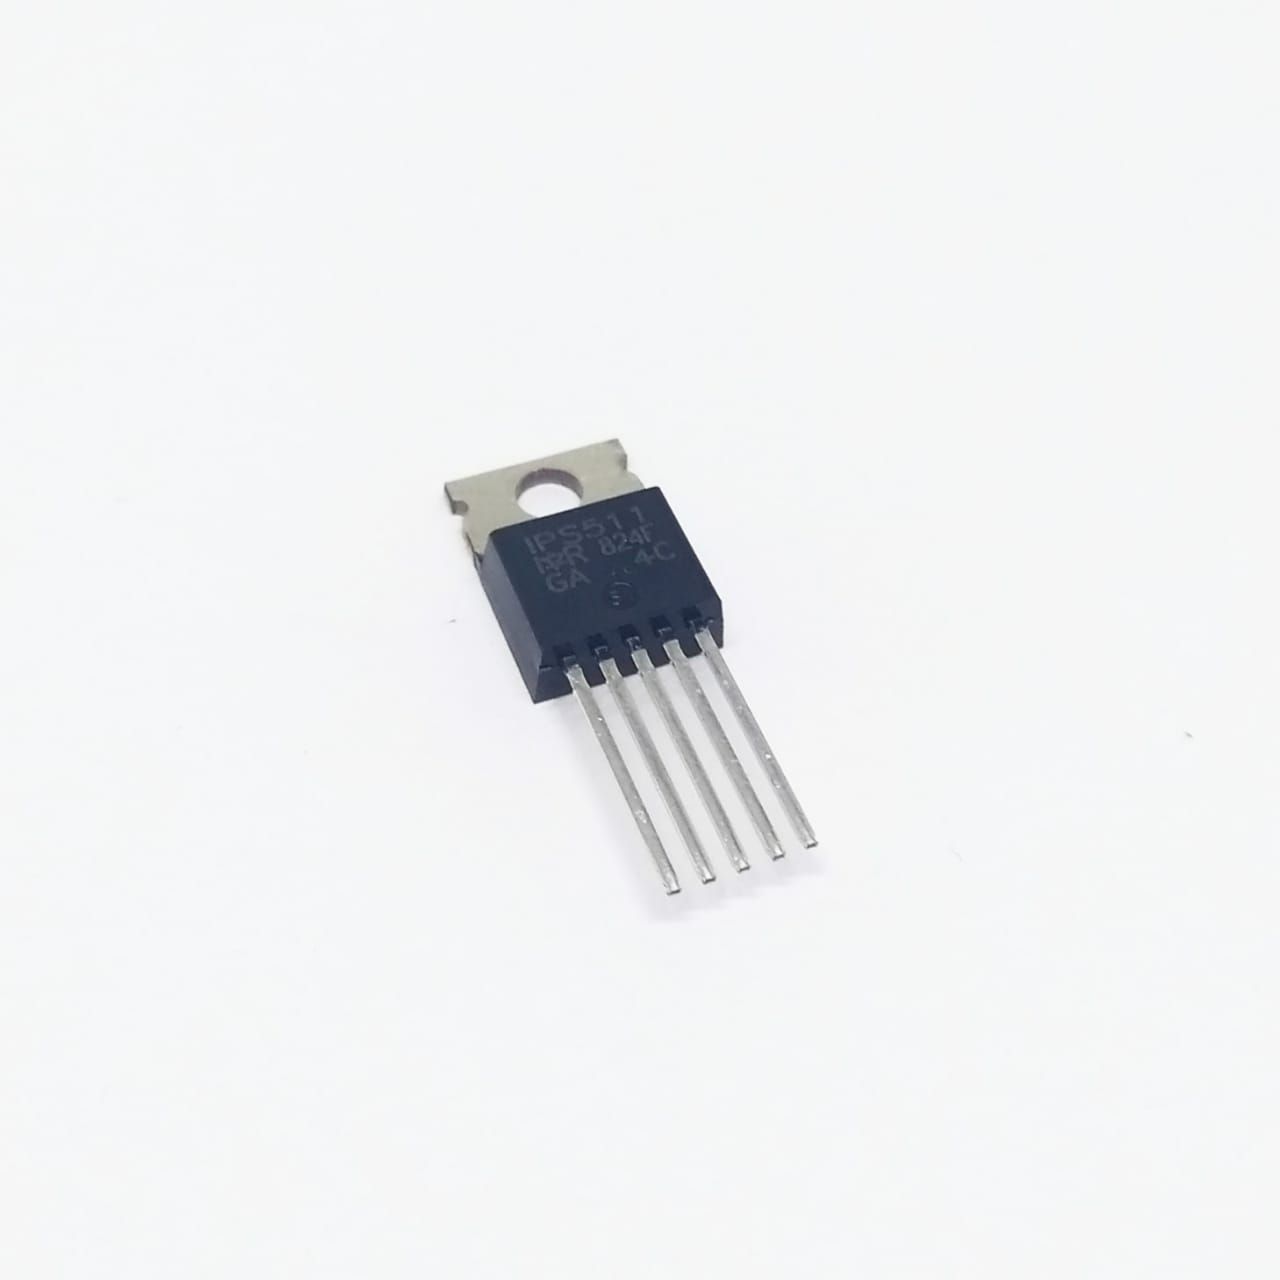 Kit 25 peças - Transistor IPS511 to-220 marca ir original